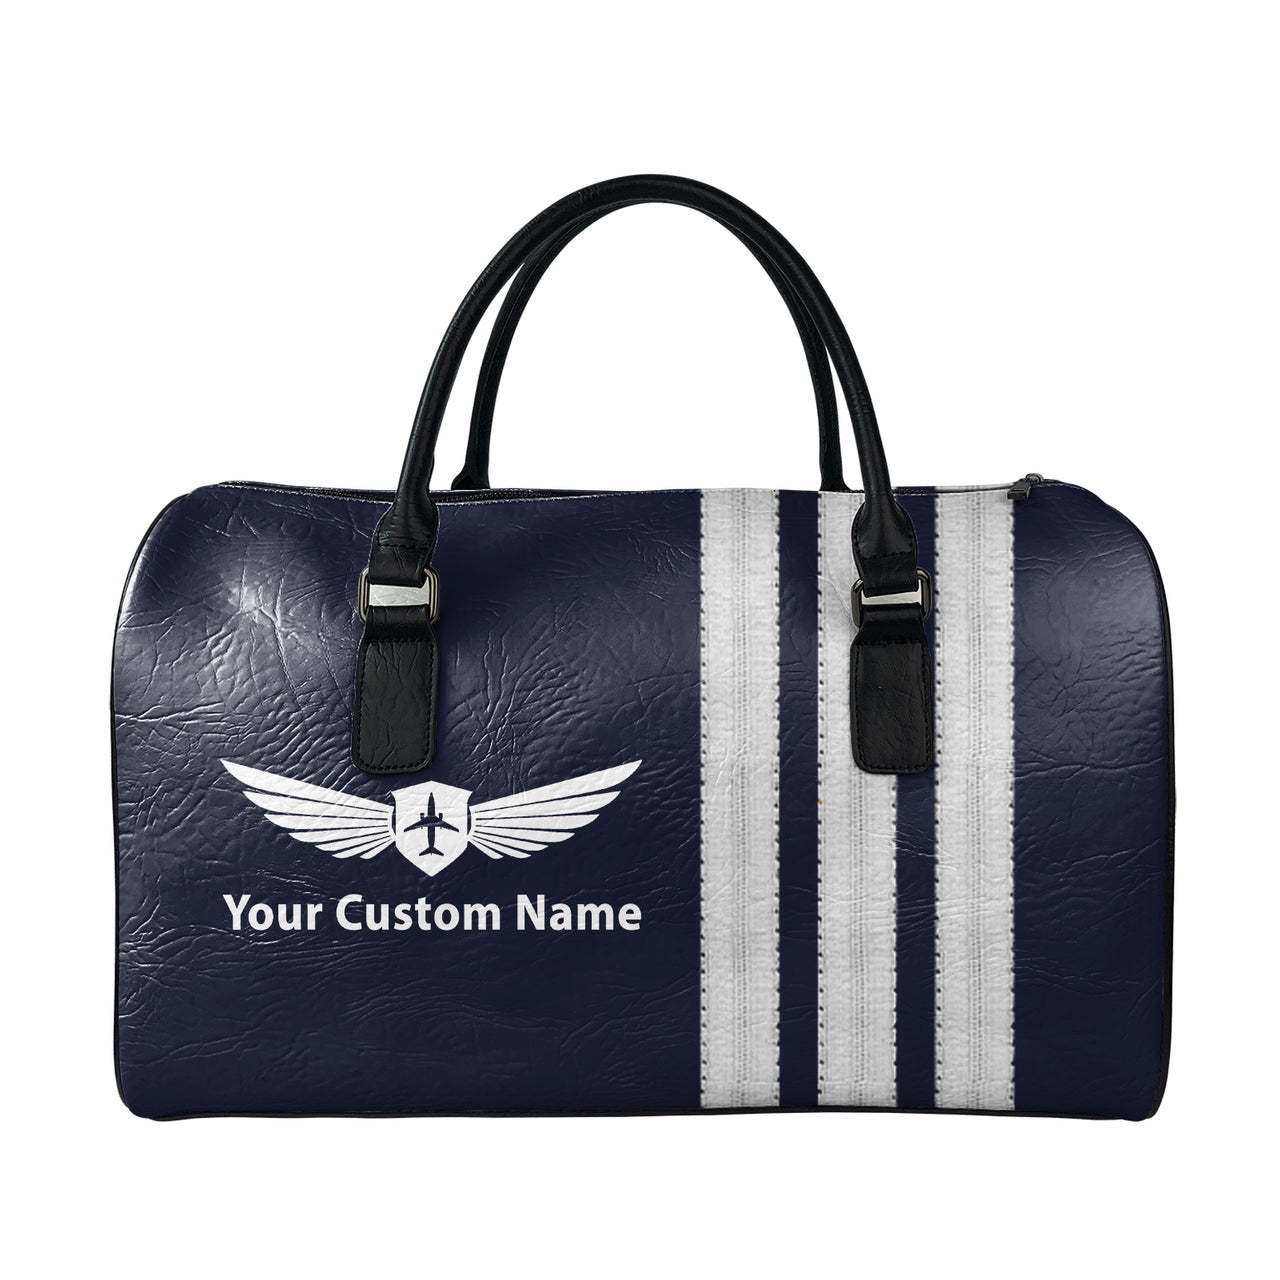 Name & Badge & Silver Special Pilot Epaulettes (4,3,2 Lines) Designed Leather Travel Bag